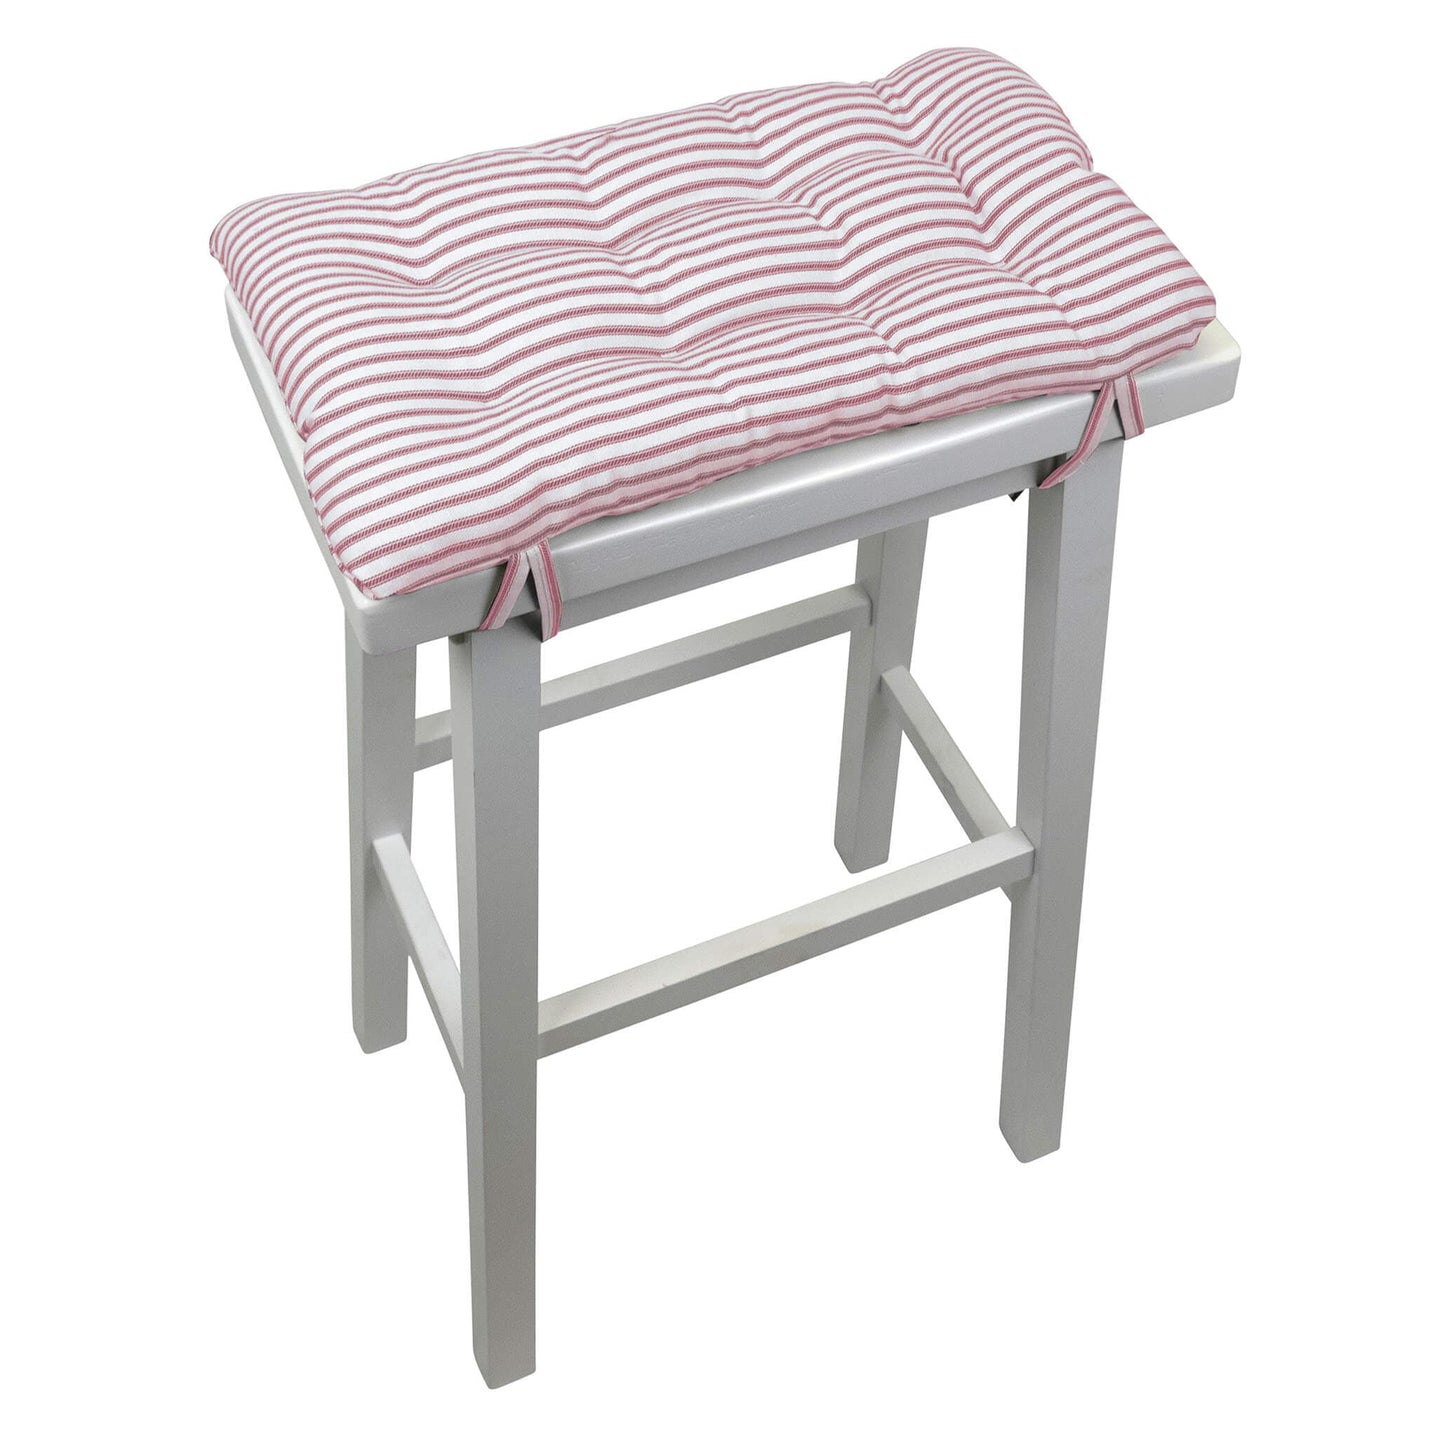 Ticking Stripe Red Saddle Stool Cushions - Barnett Home Decor - Gaucho Stool - Satori Cushions - Striped - Red & White